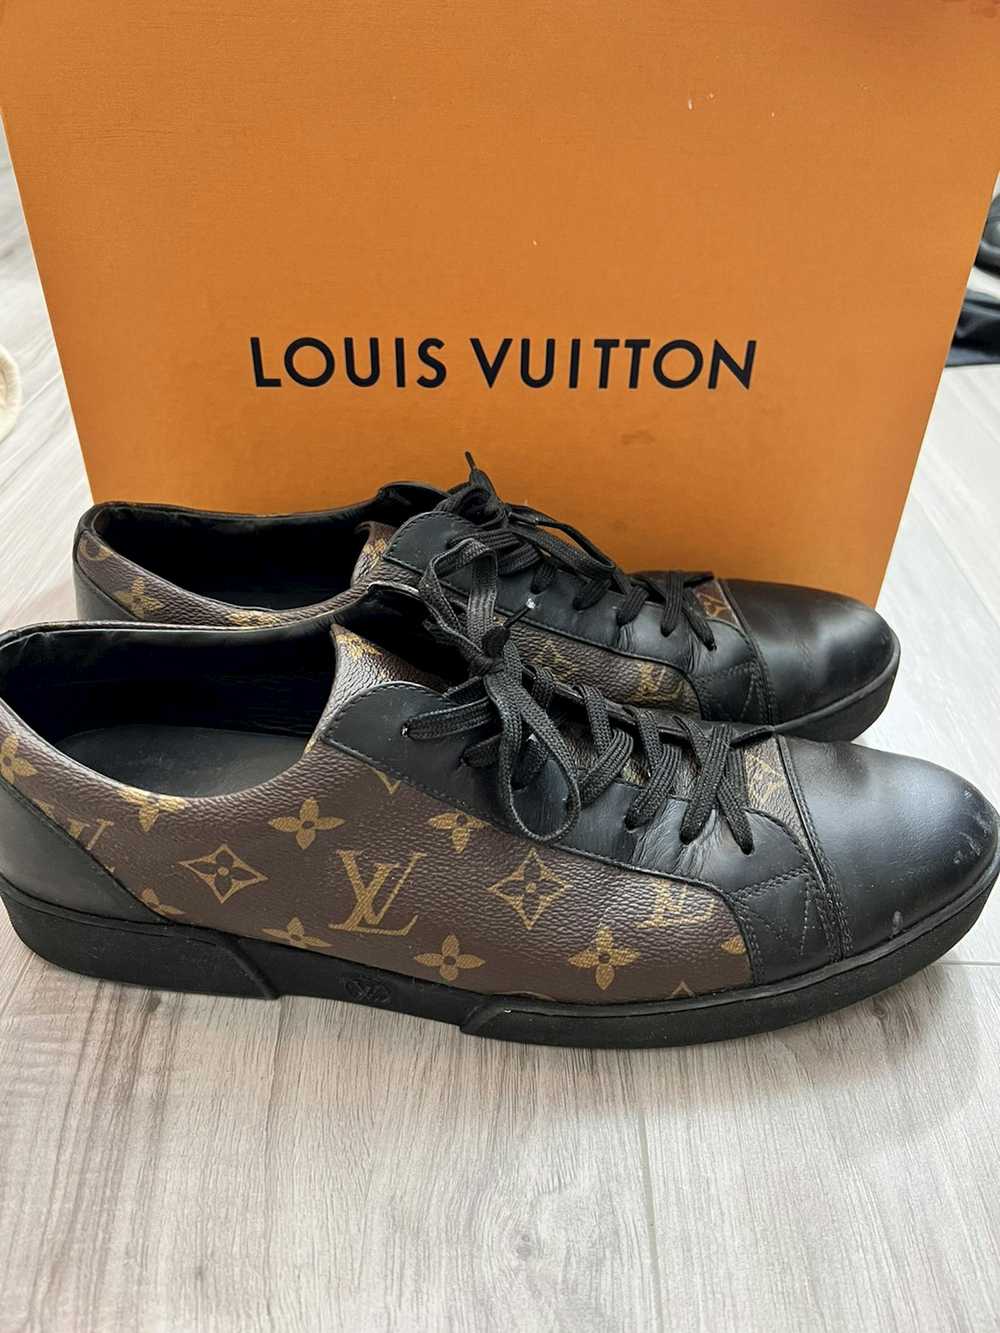 Louis Vuitton Louis Vuitton sneakers - image 6